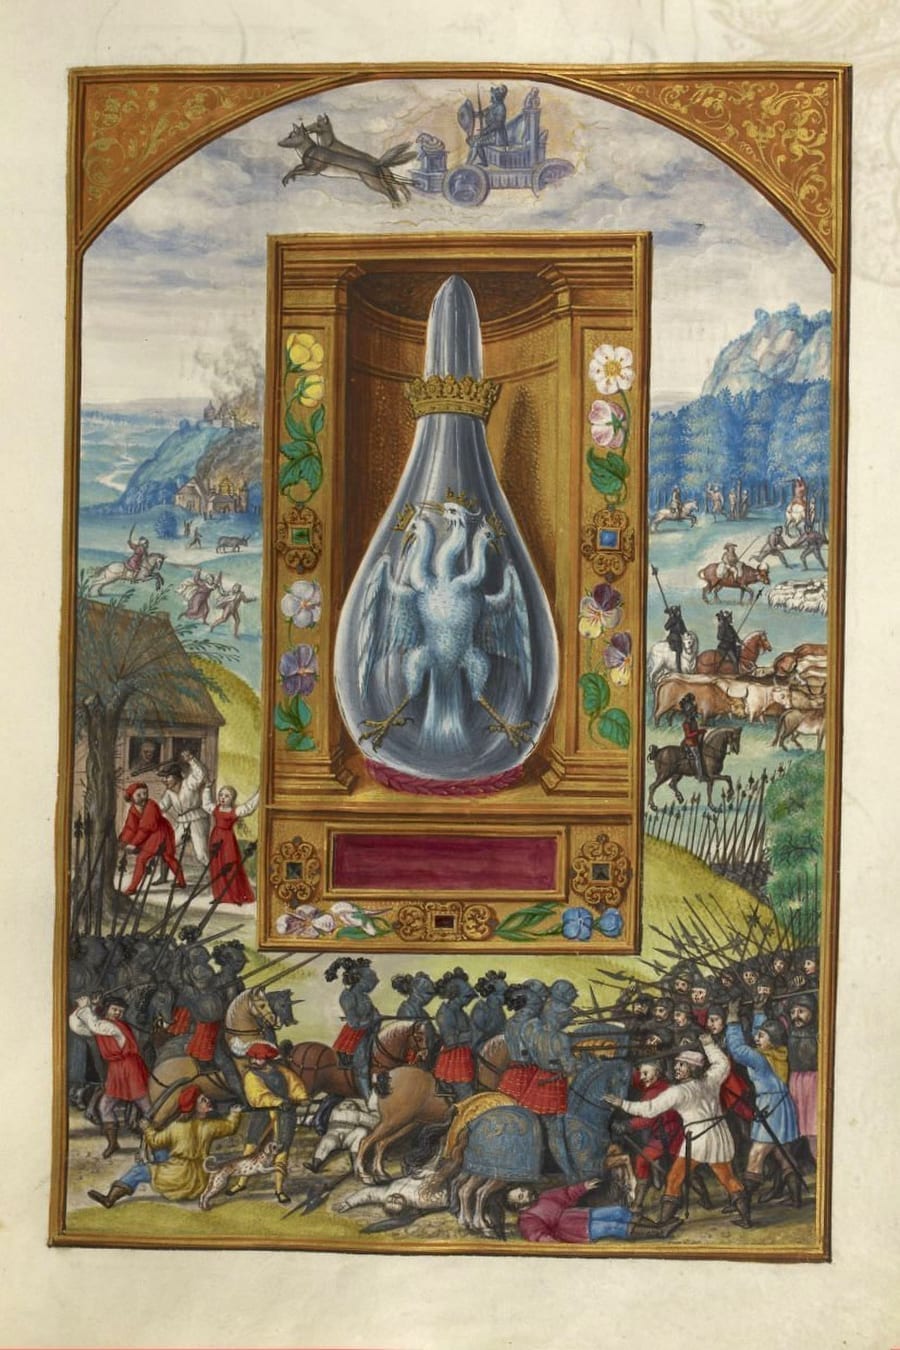 Illustration of a three headed bird and war from the Alchemical manuscript Splendor Solis